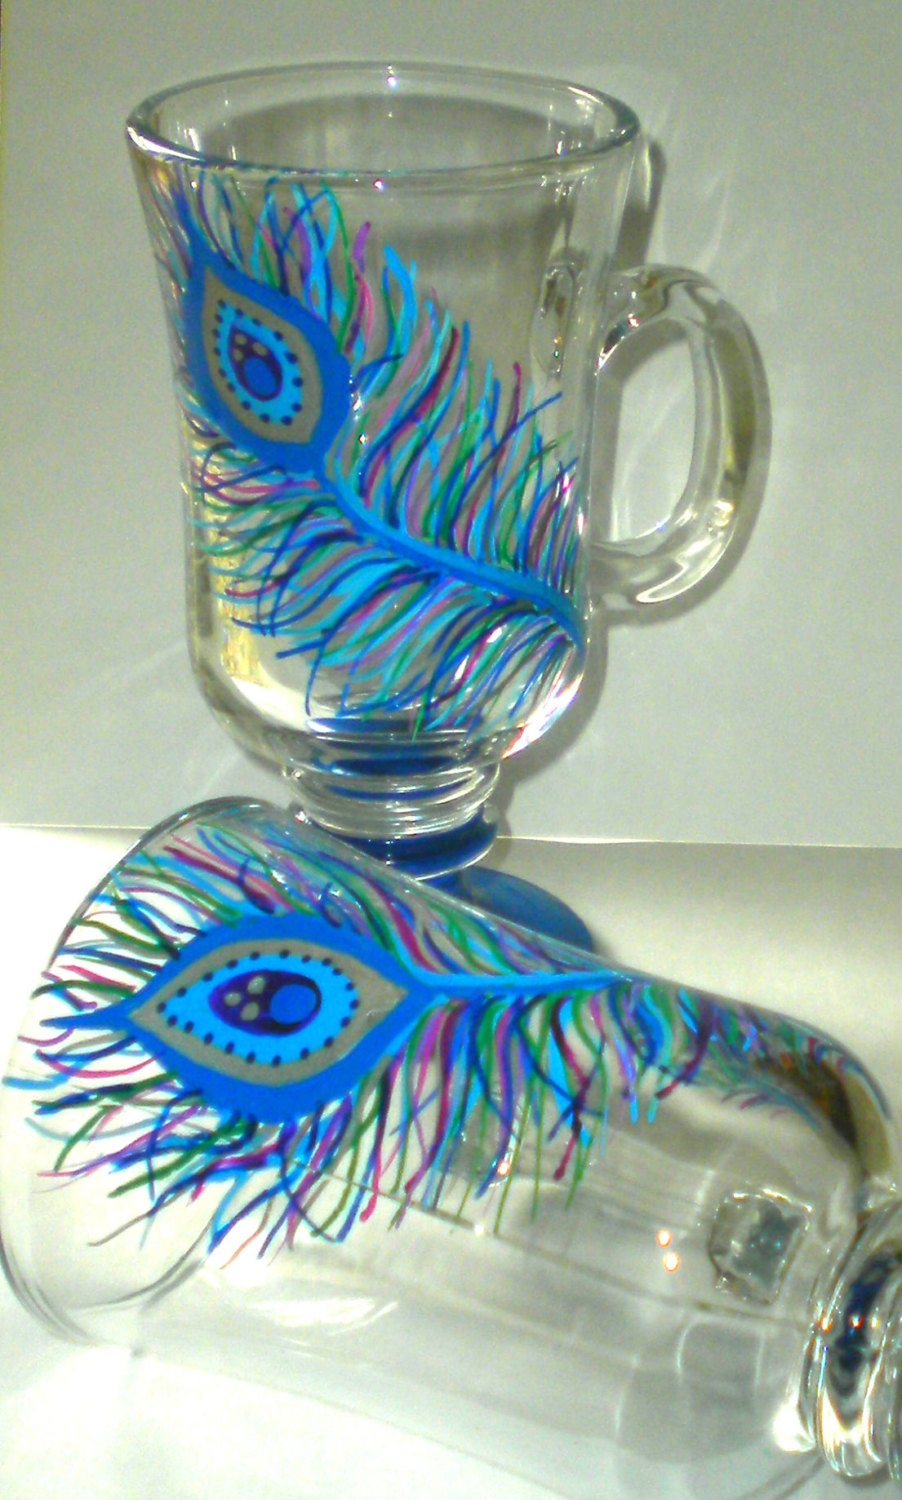 Irish Coffee Mug - Glass - Handpainted - Peacock - Feather - Peacock Feather - One-of-a-kind